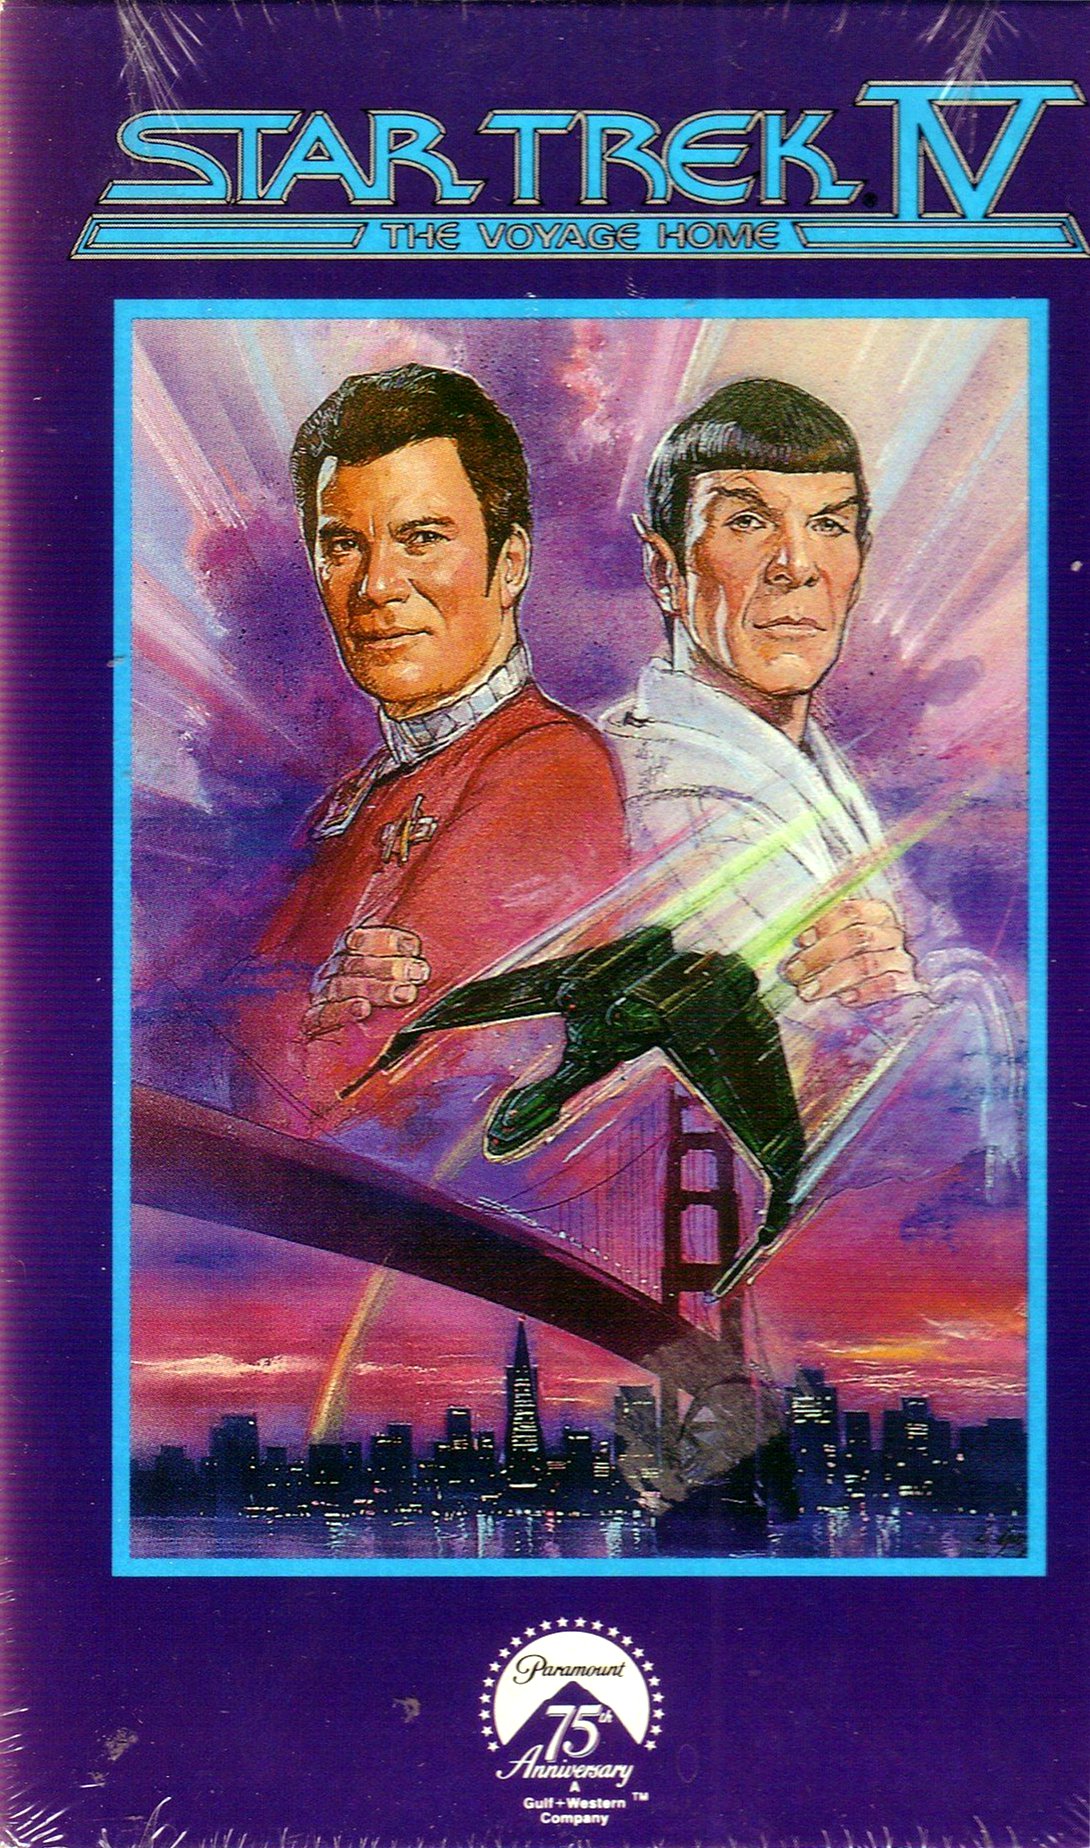 Star Trek IV: The Voyage Home #19